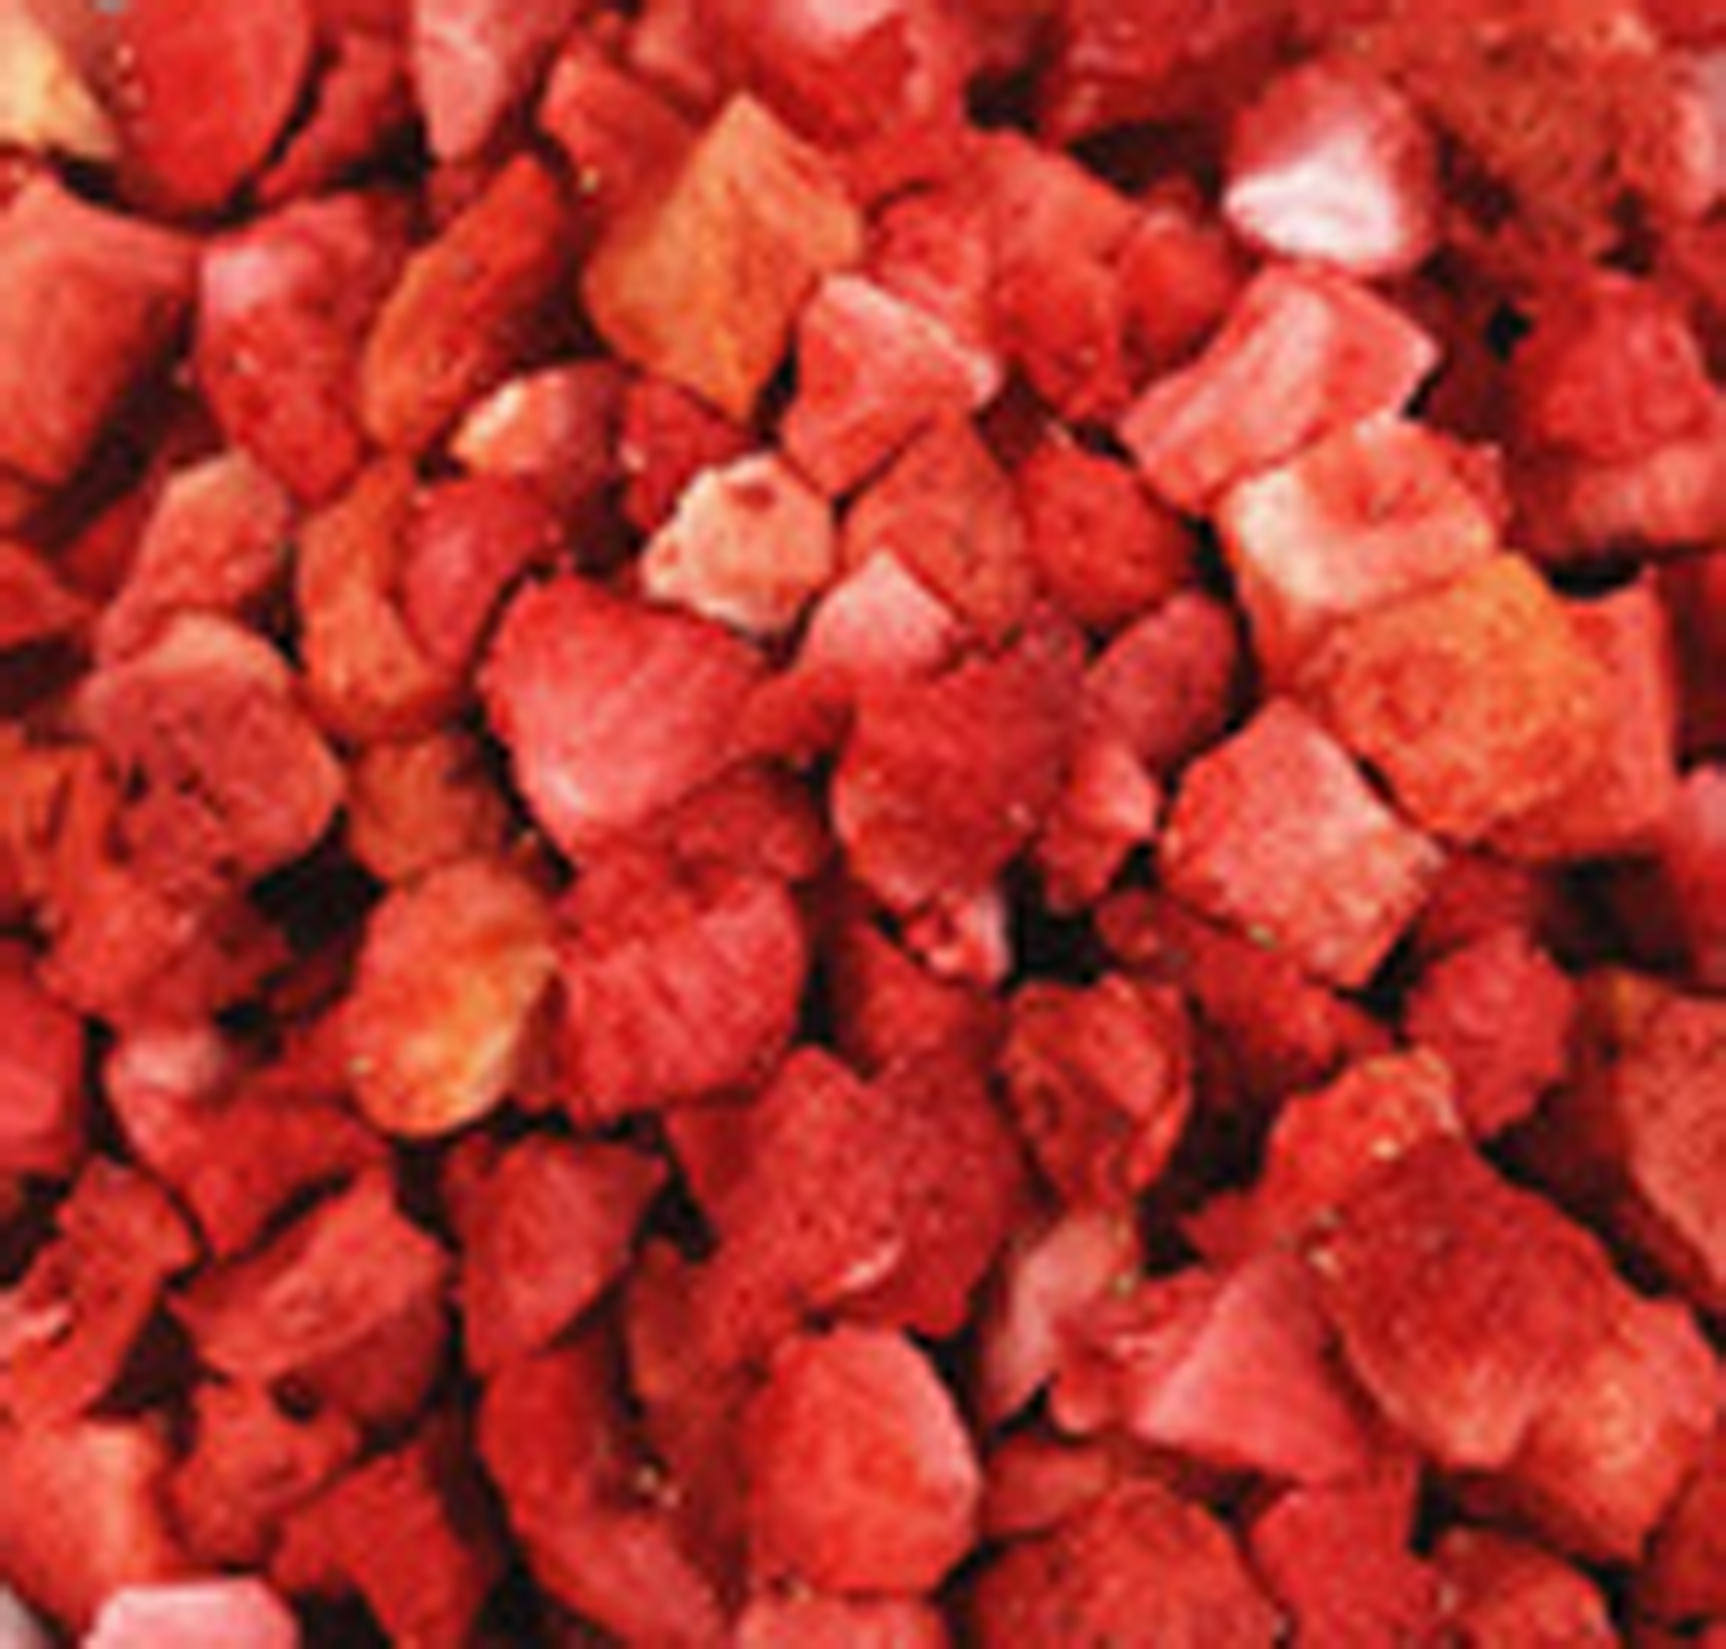 Freeze dried strawberry solution